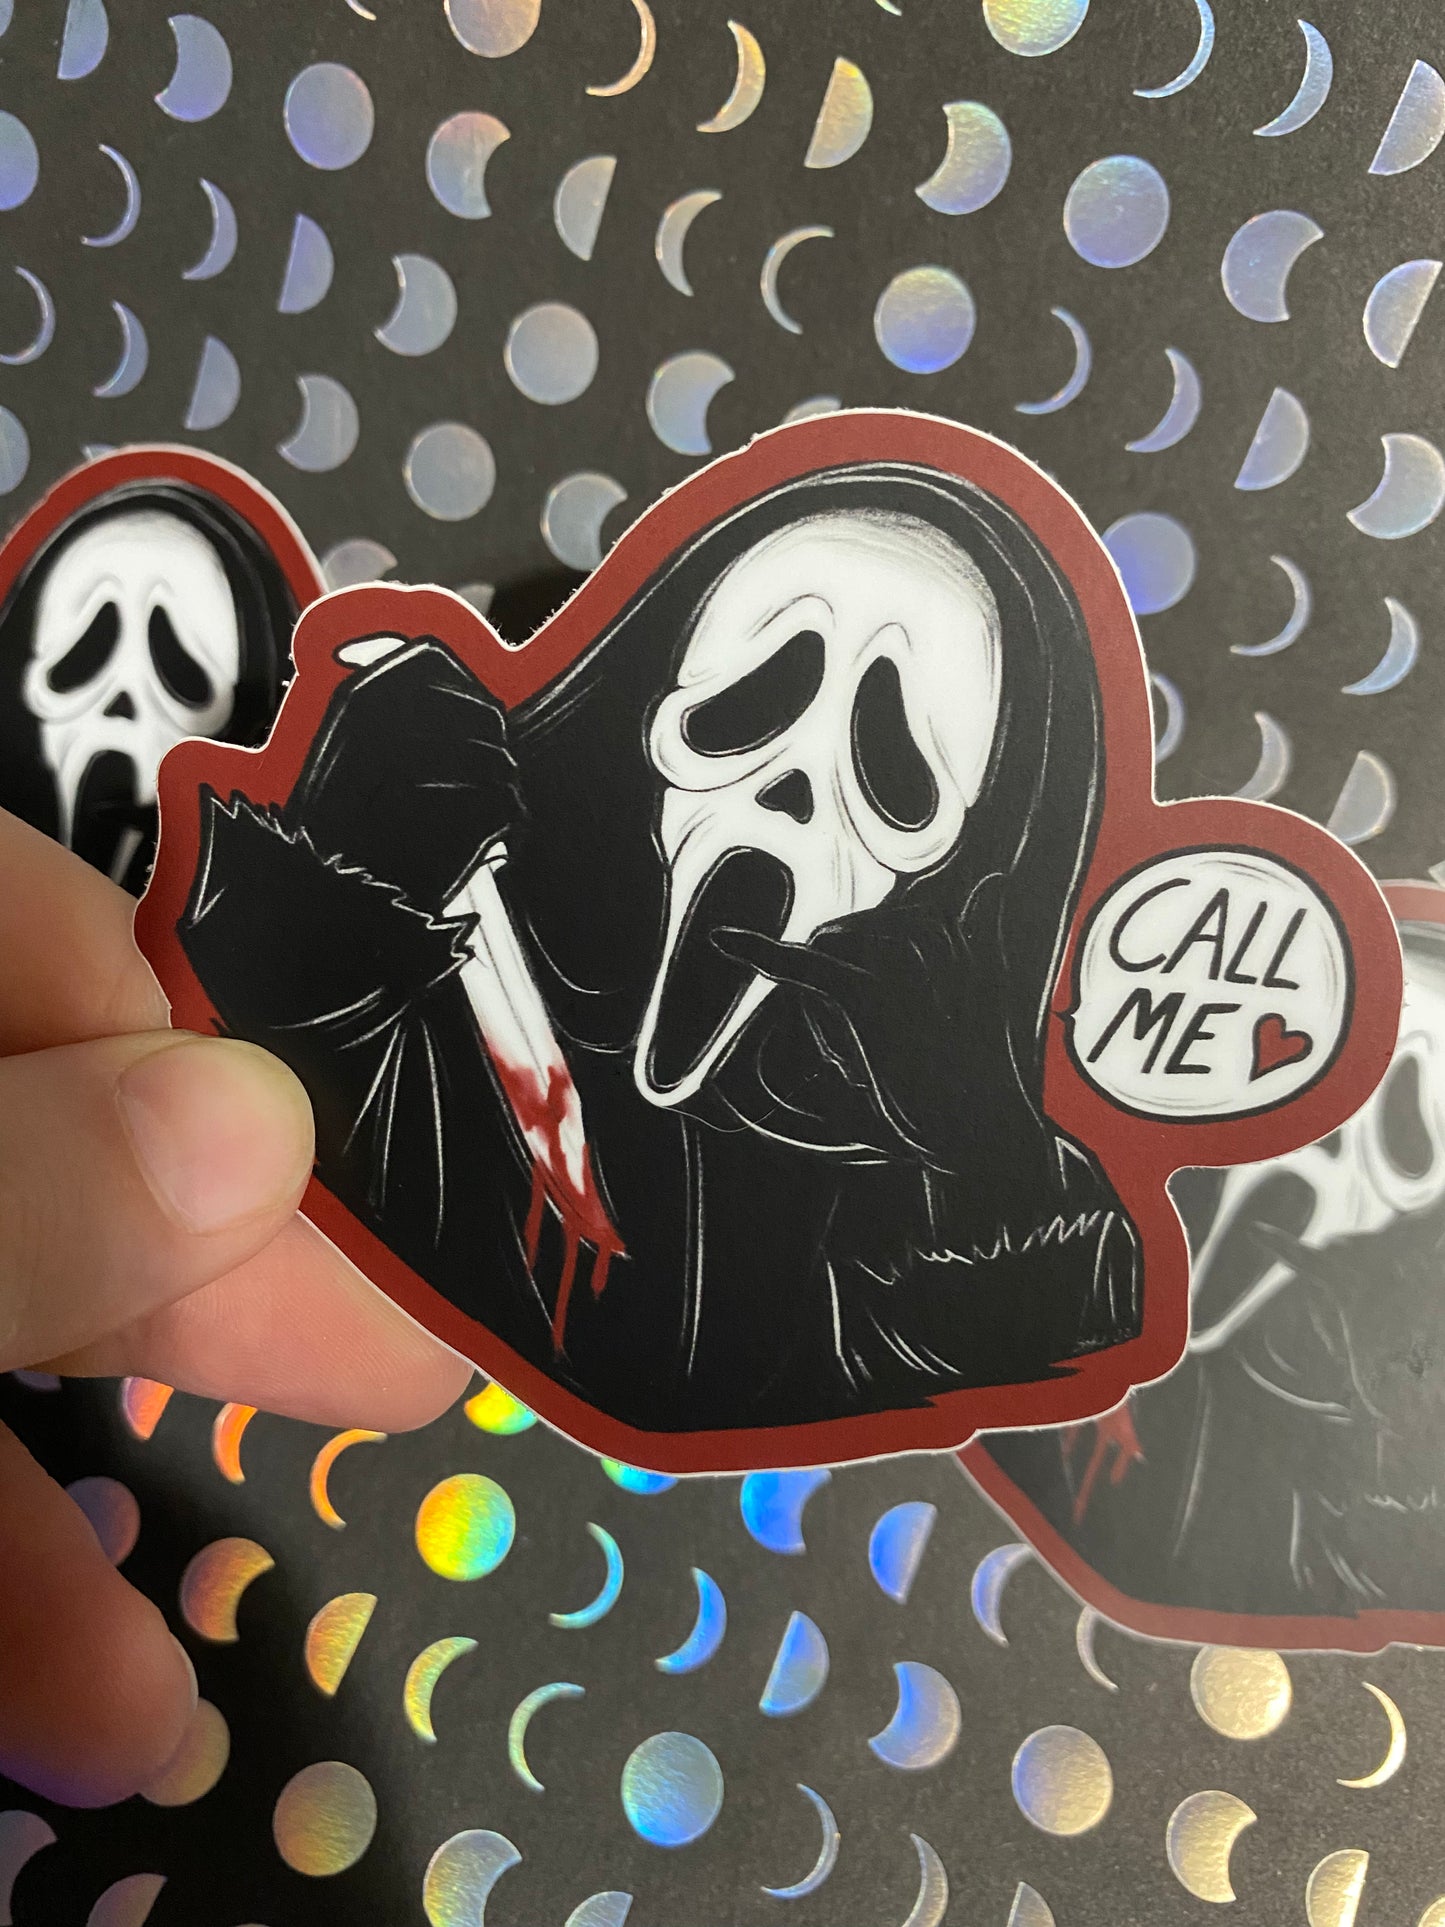 “Call Me” Ghostface Sticker - Vinyl/Glitter Finish